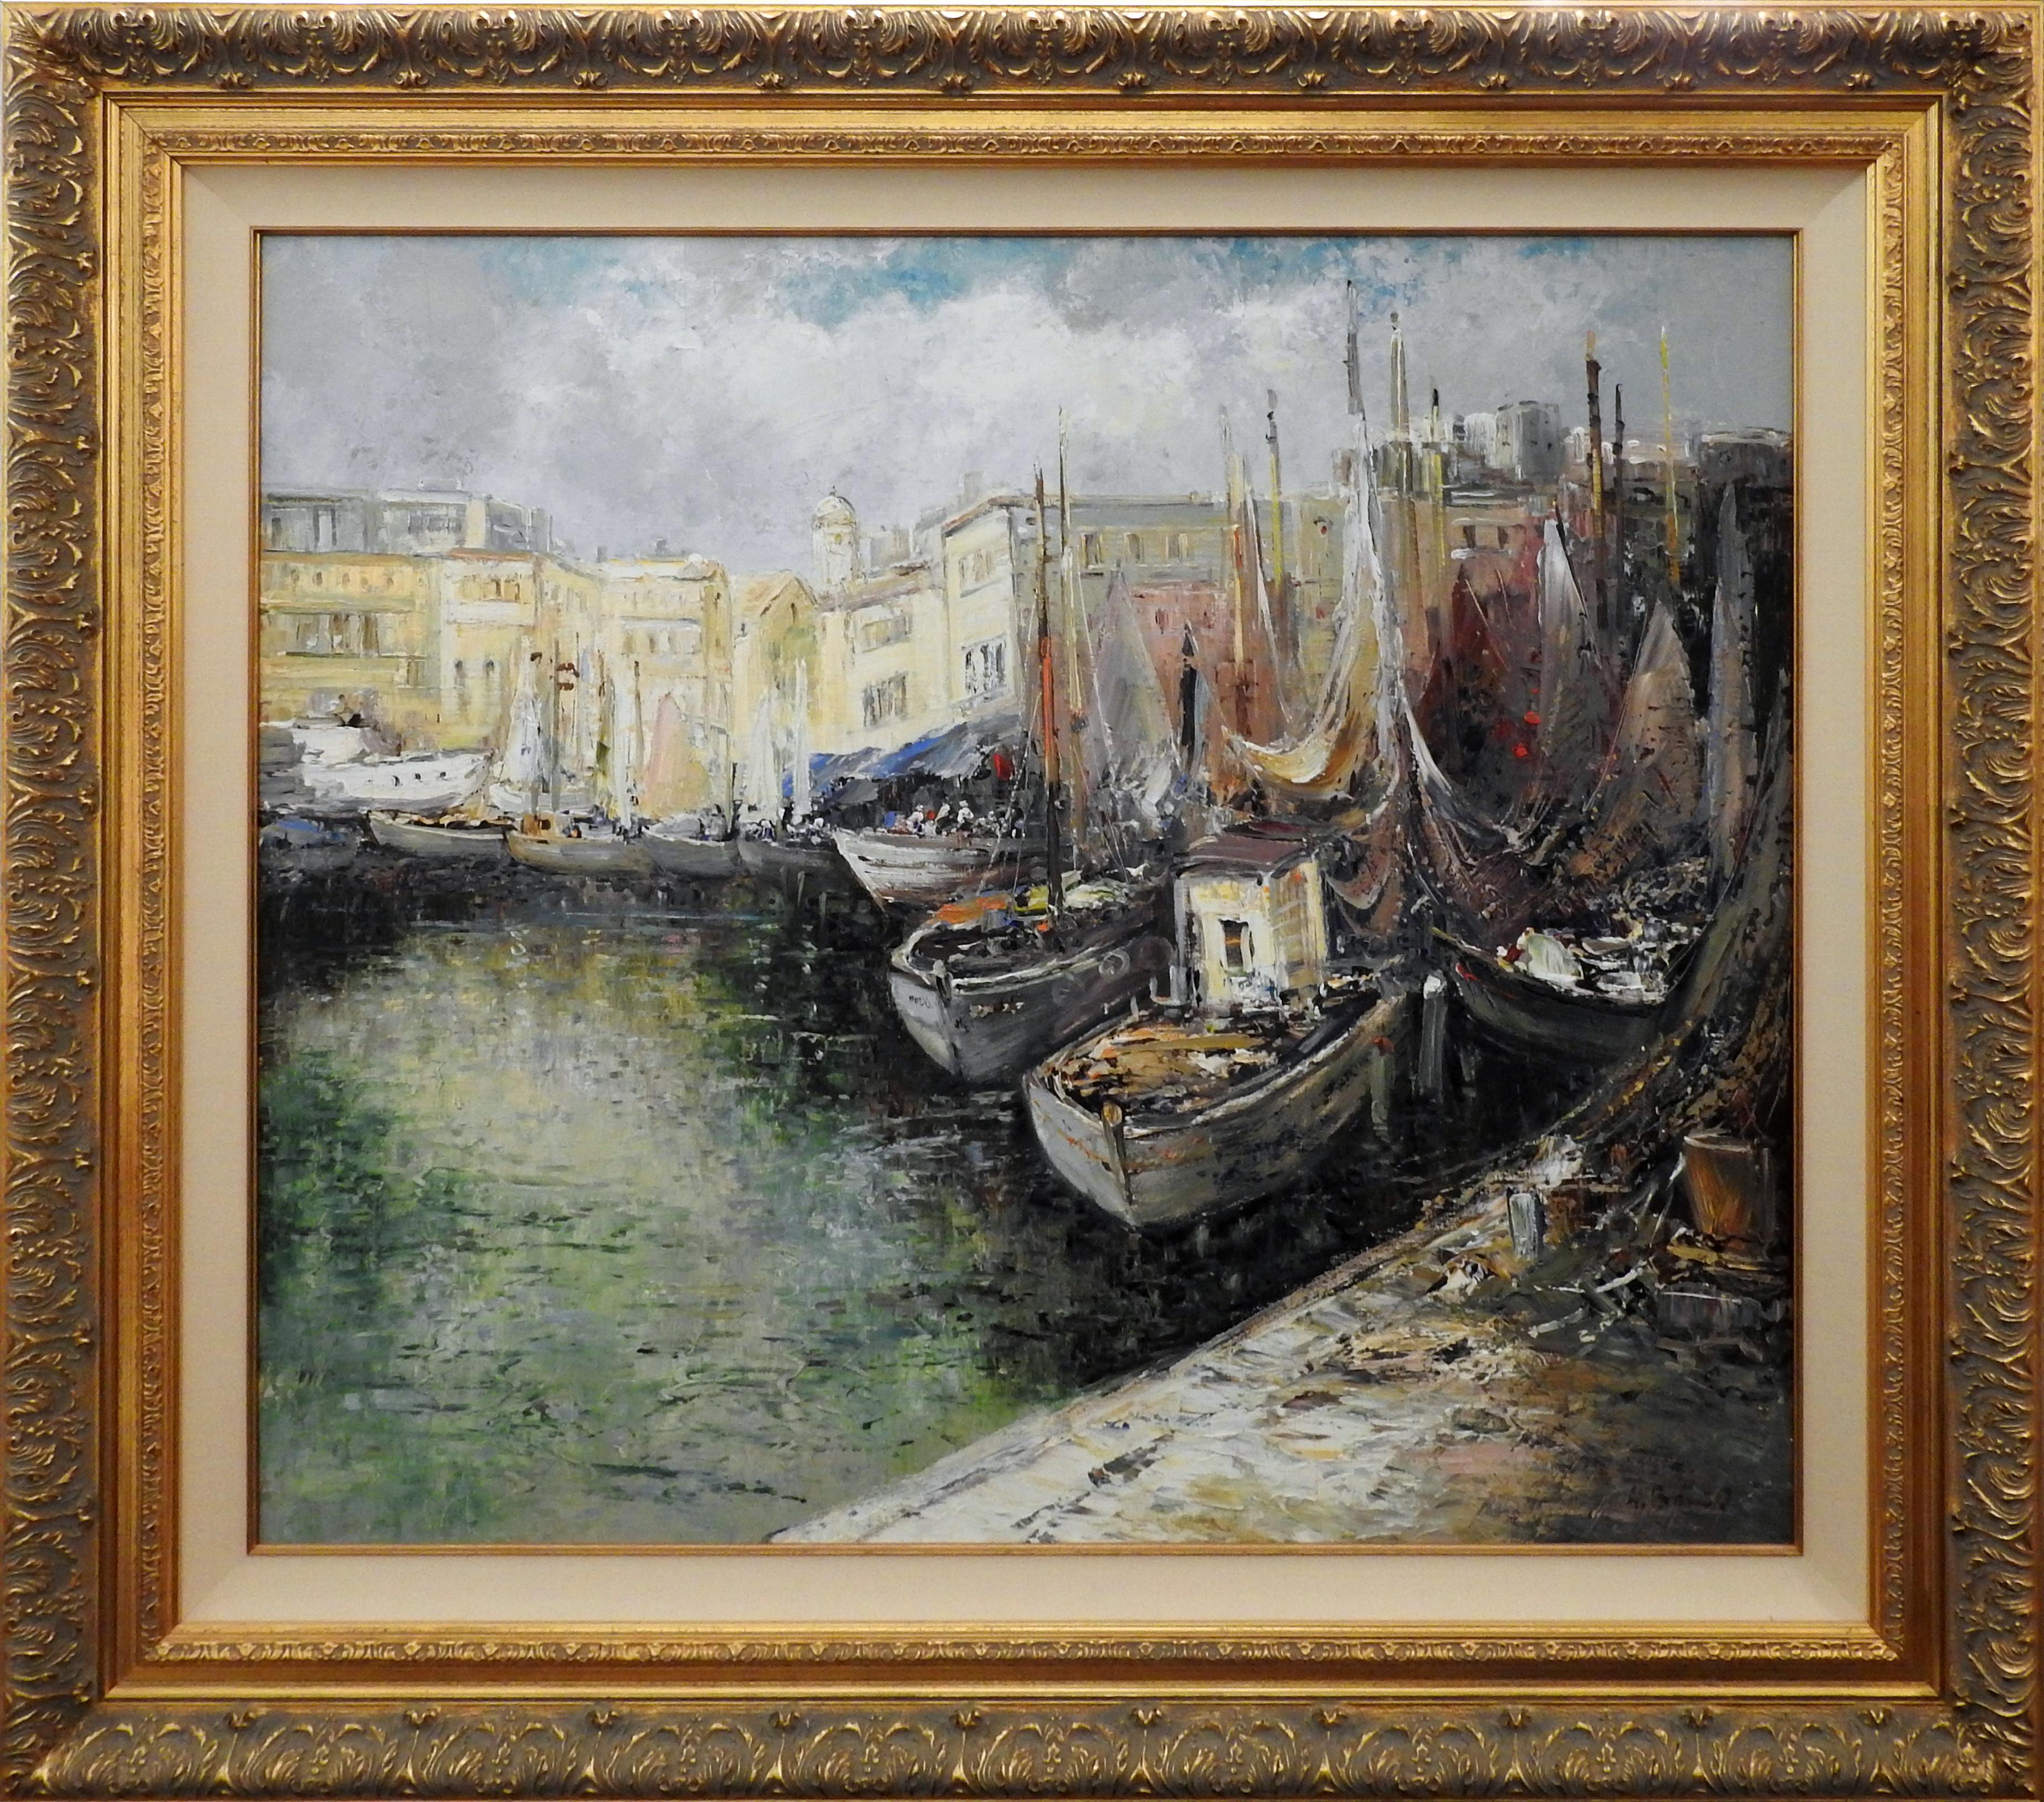 "Moored Sailboats", Willi Bauer, Oil/Canvas, 27x31, Impressionist Seascape